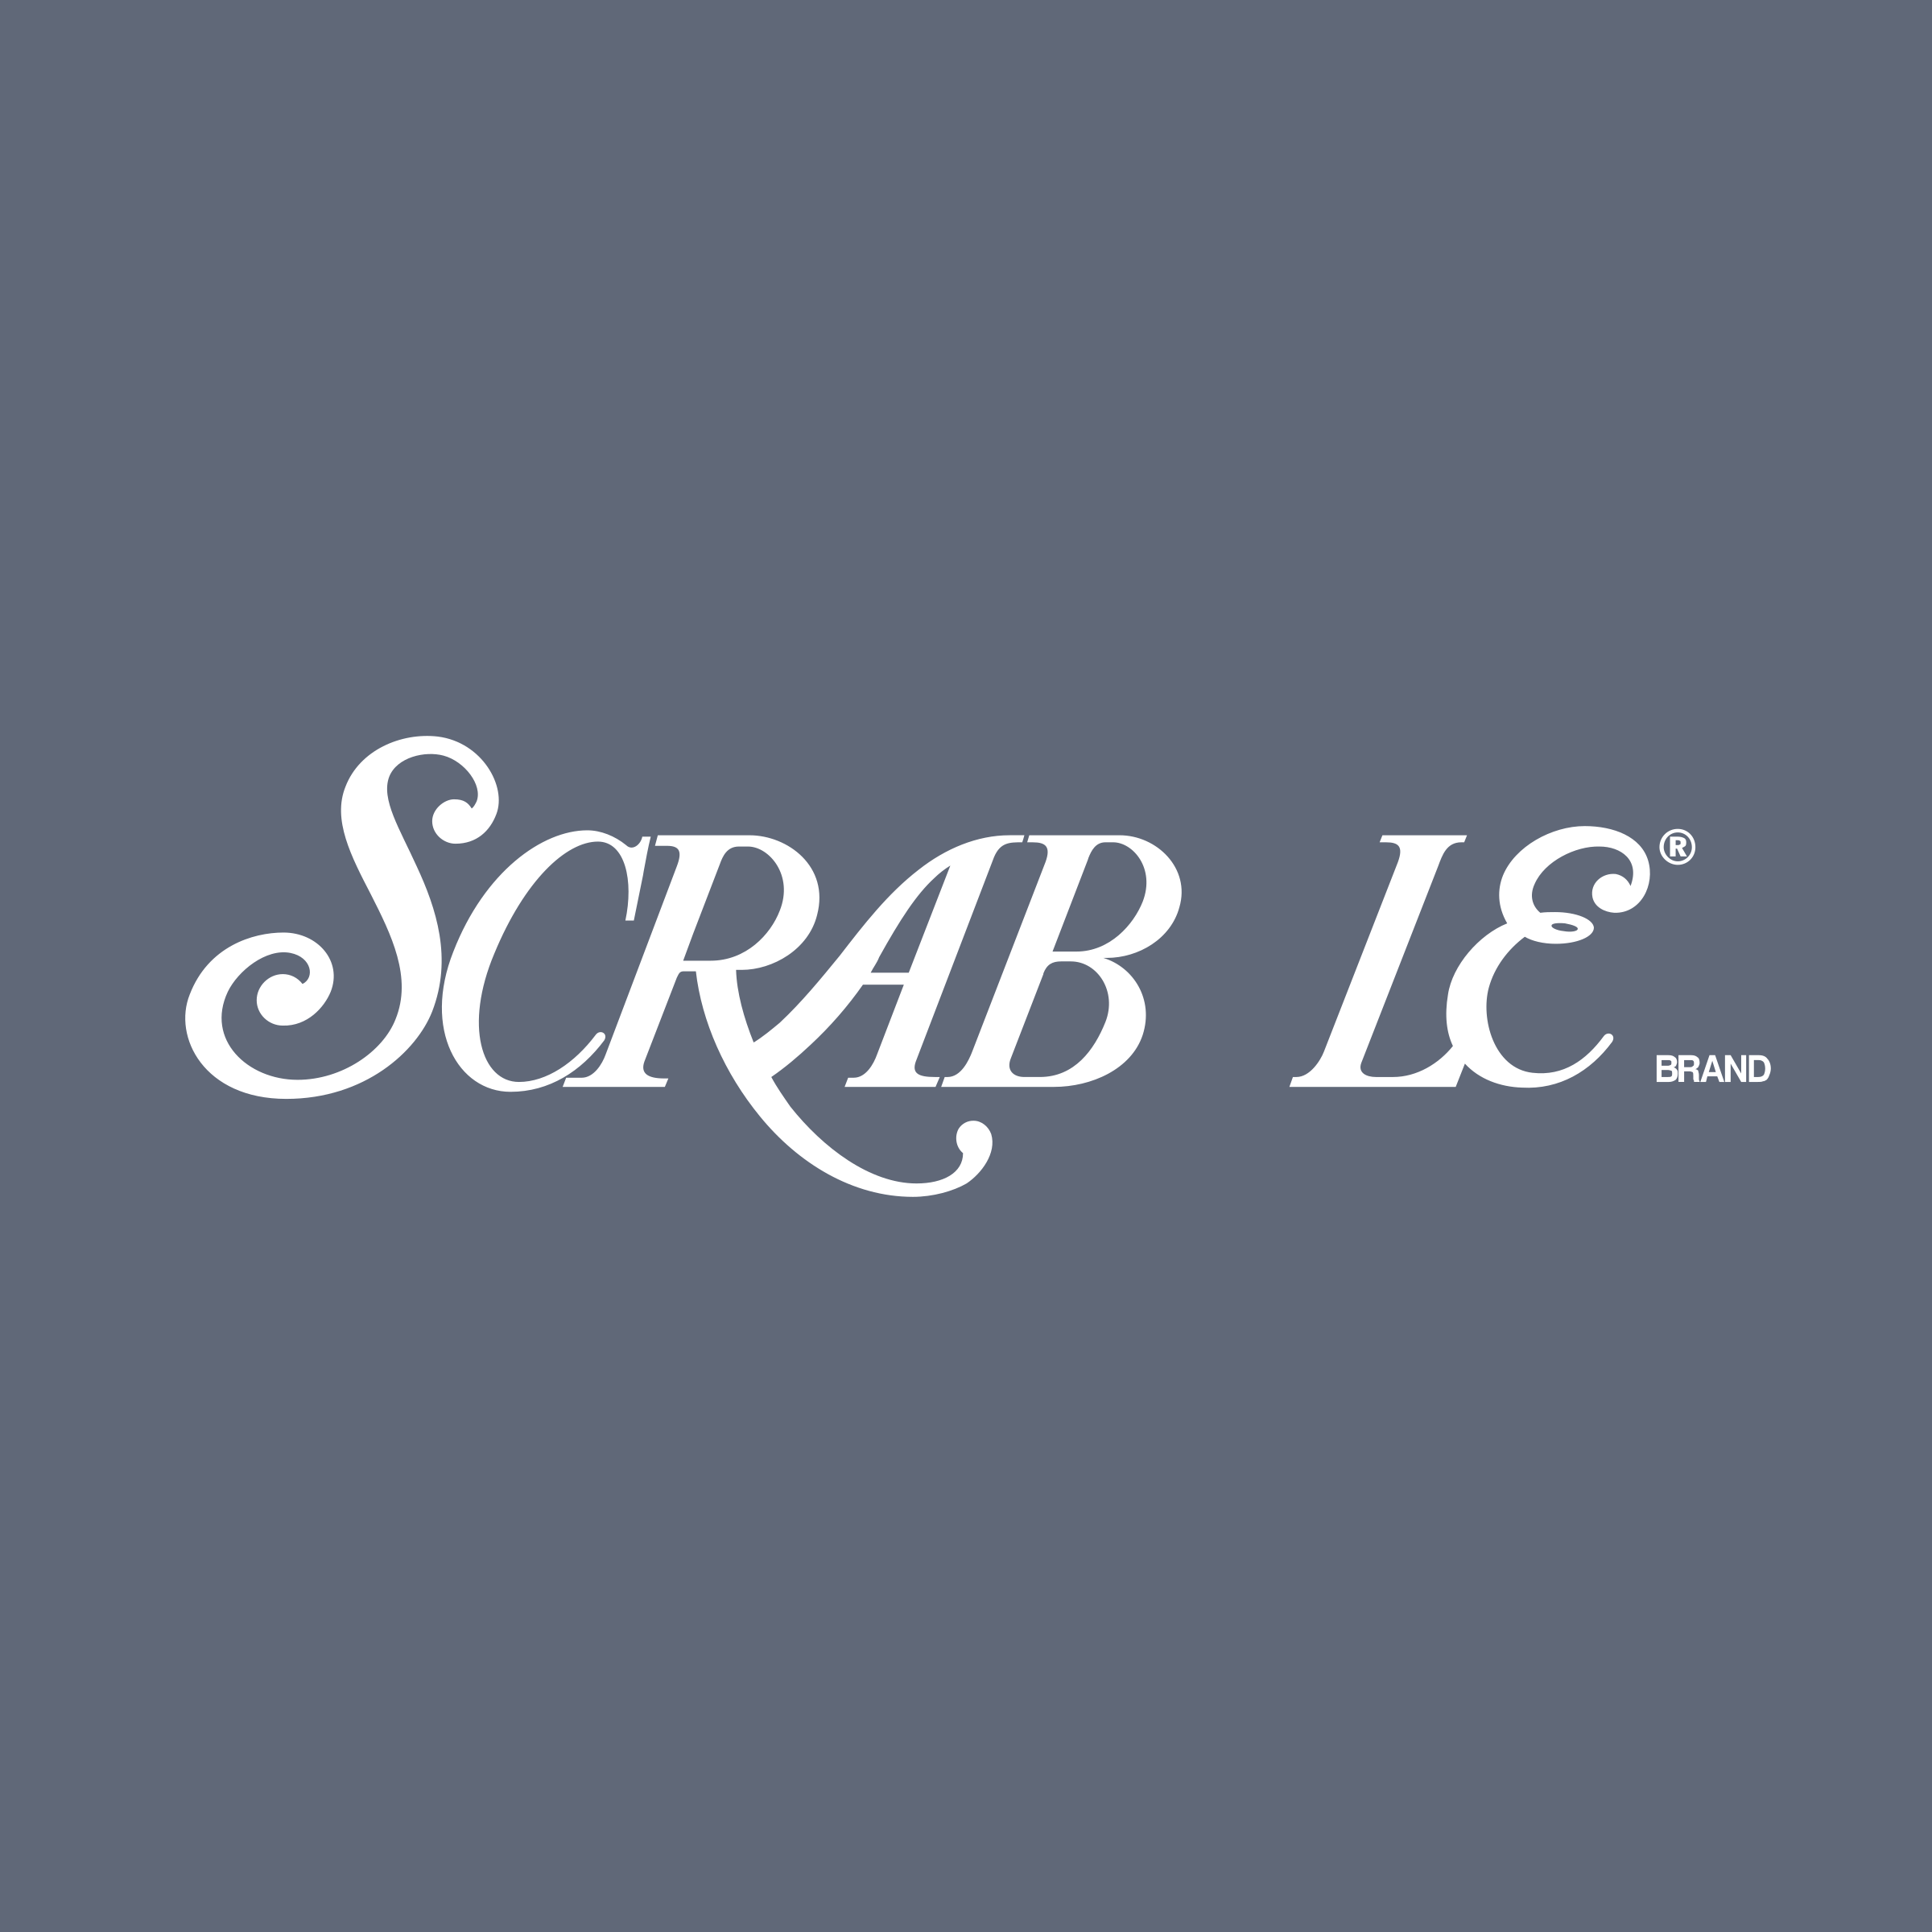 Scrabble Logo - Scrabble Logo PNG Transparent & SVG Vector - Freebie Supply